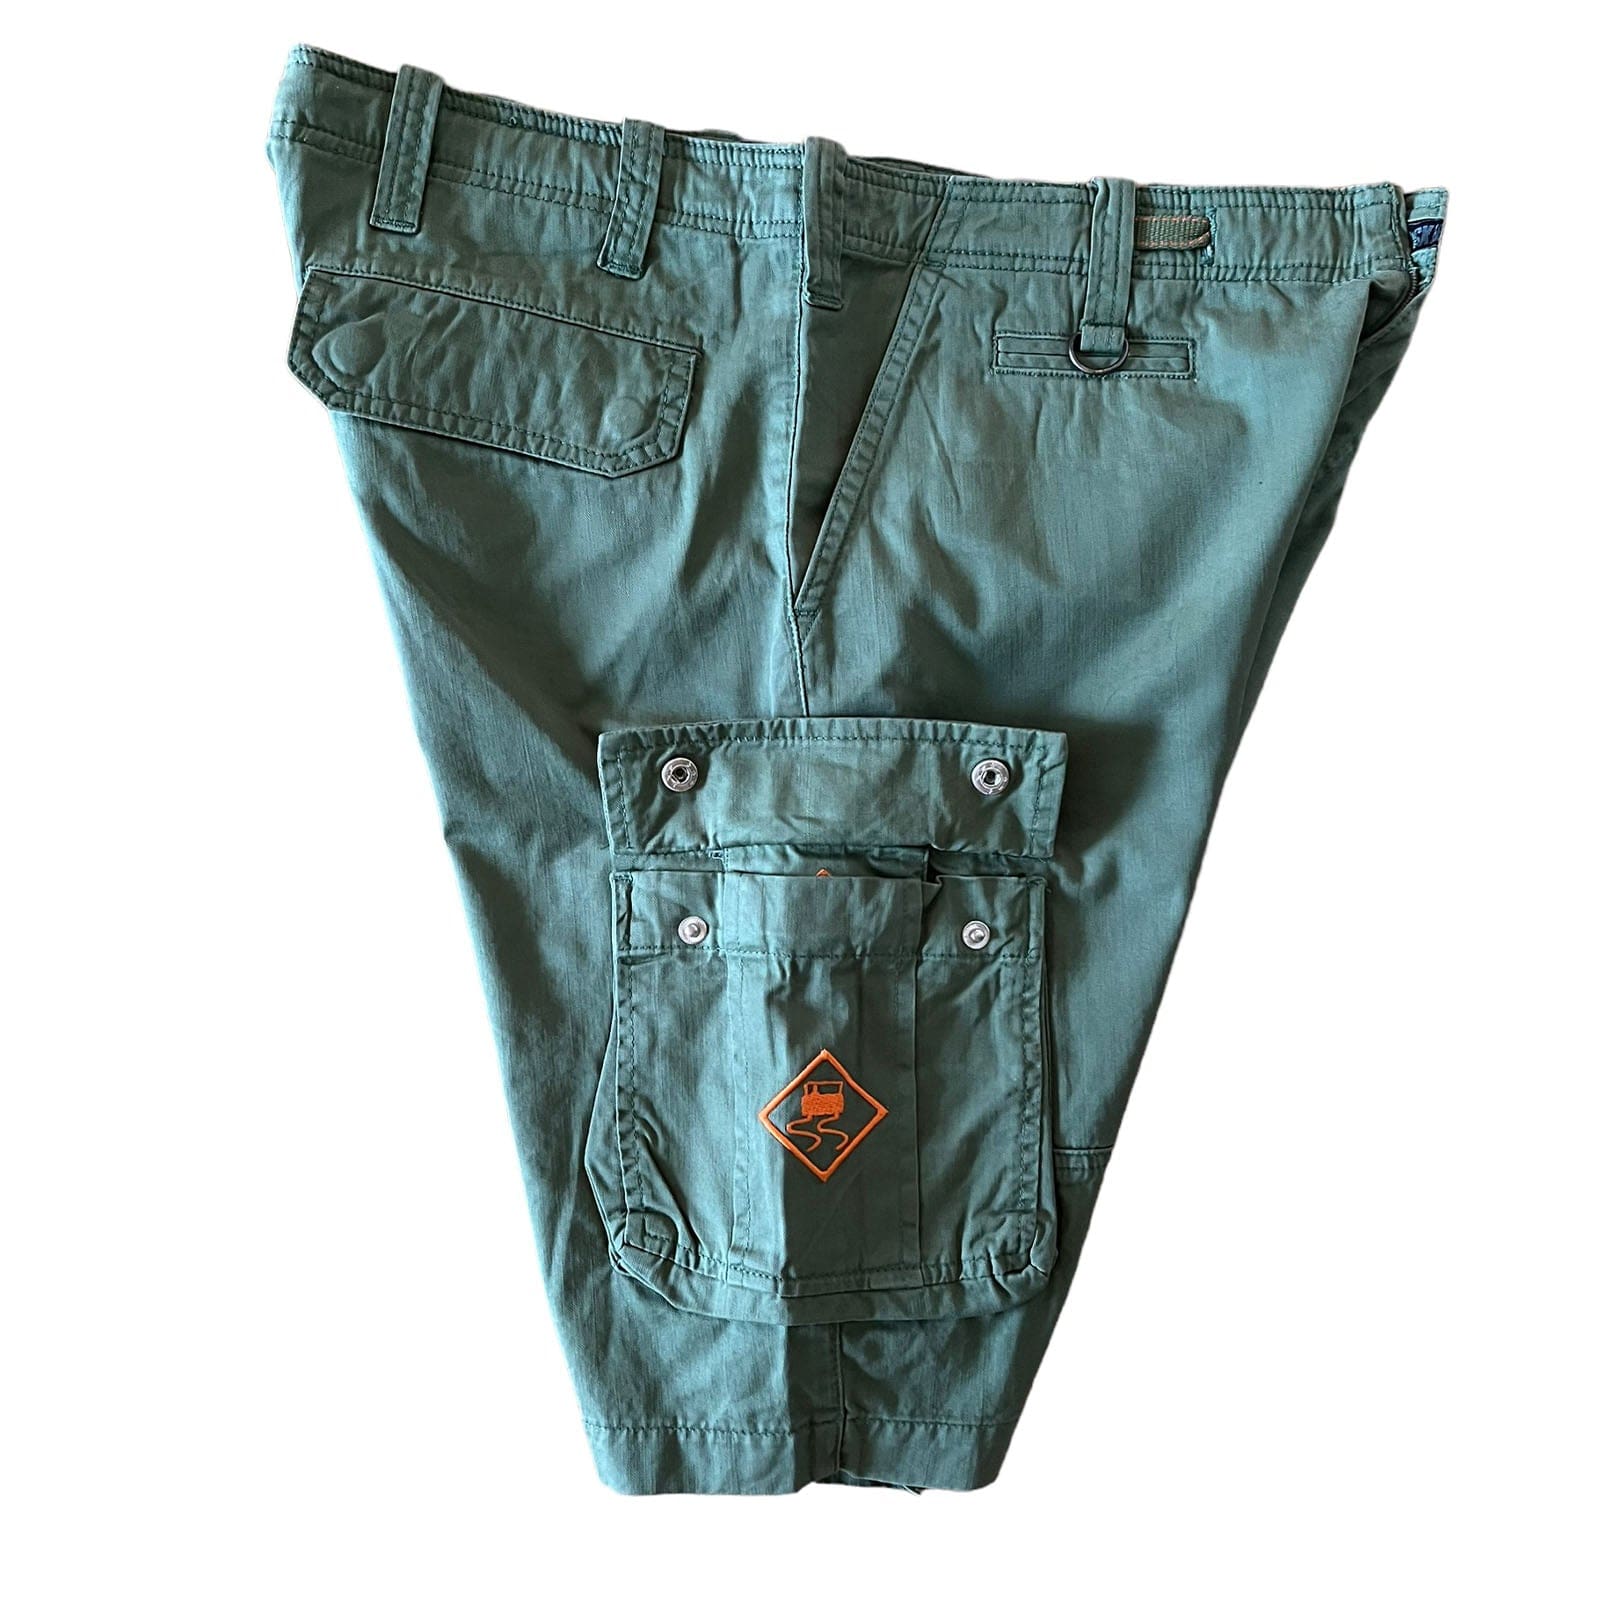 SKIDZ Shorts Canvas Cargo Shorts - Green